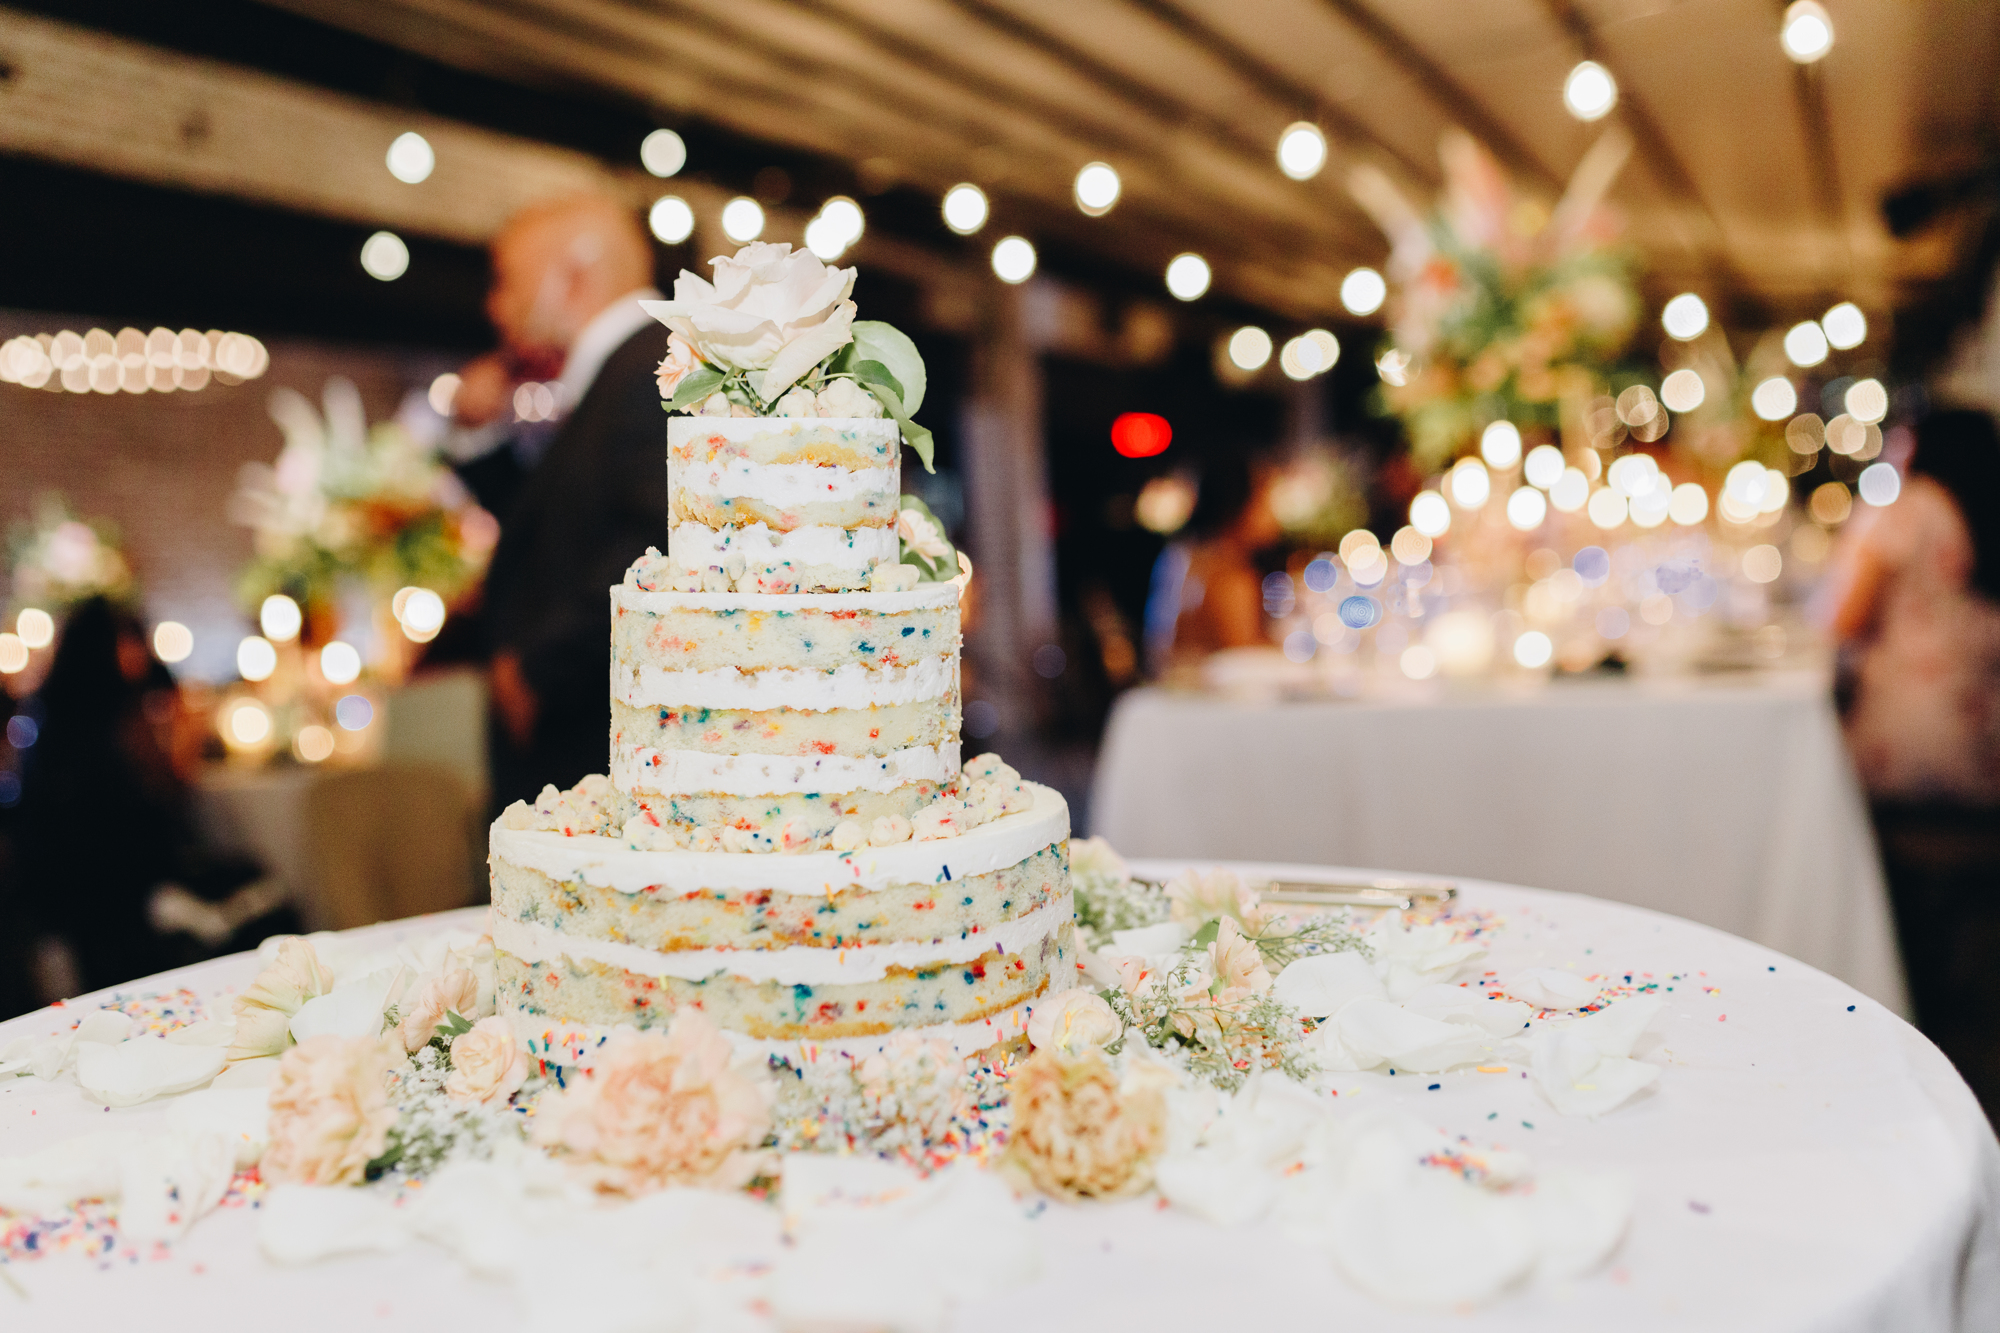 Milk Bar wedding cake at the Ravel Hotel wedding reception